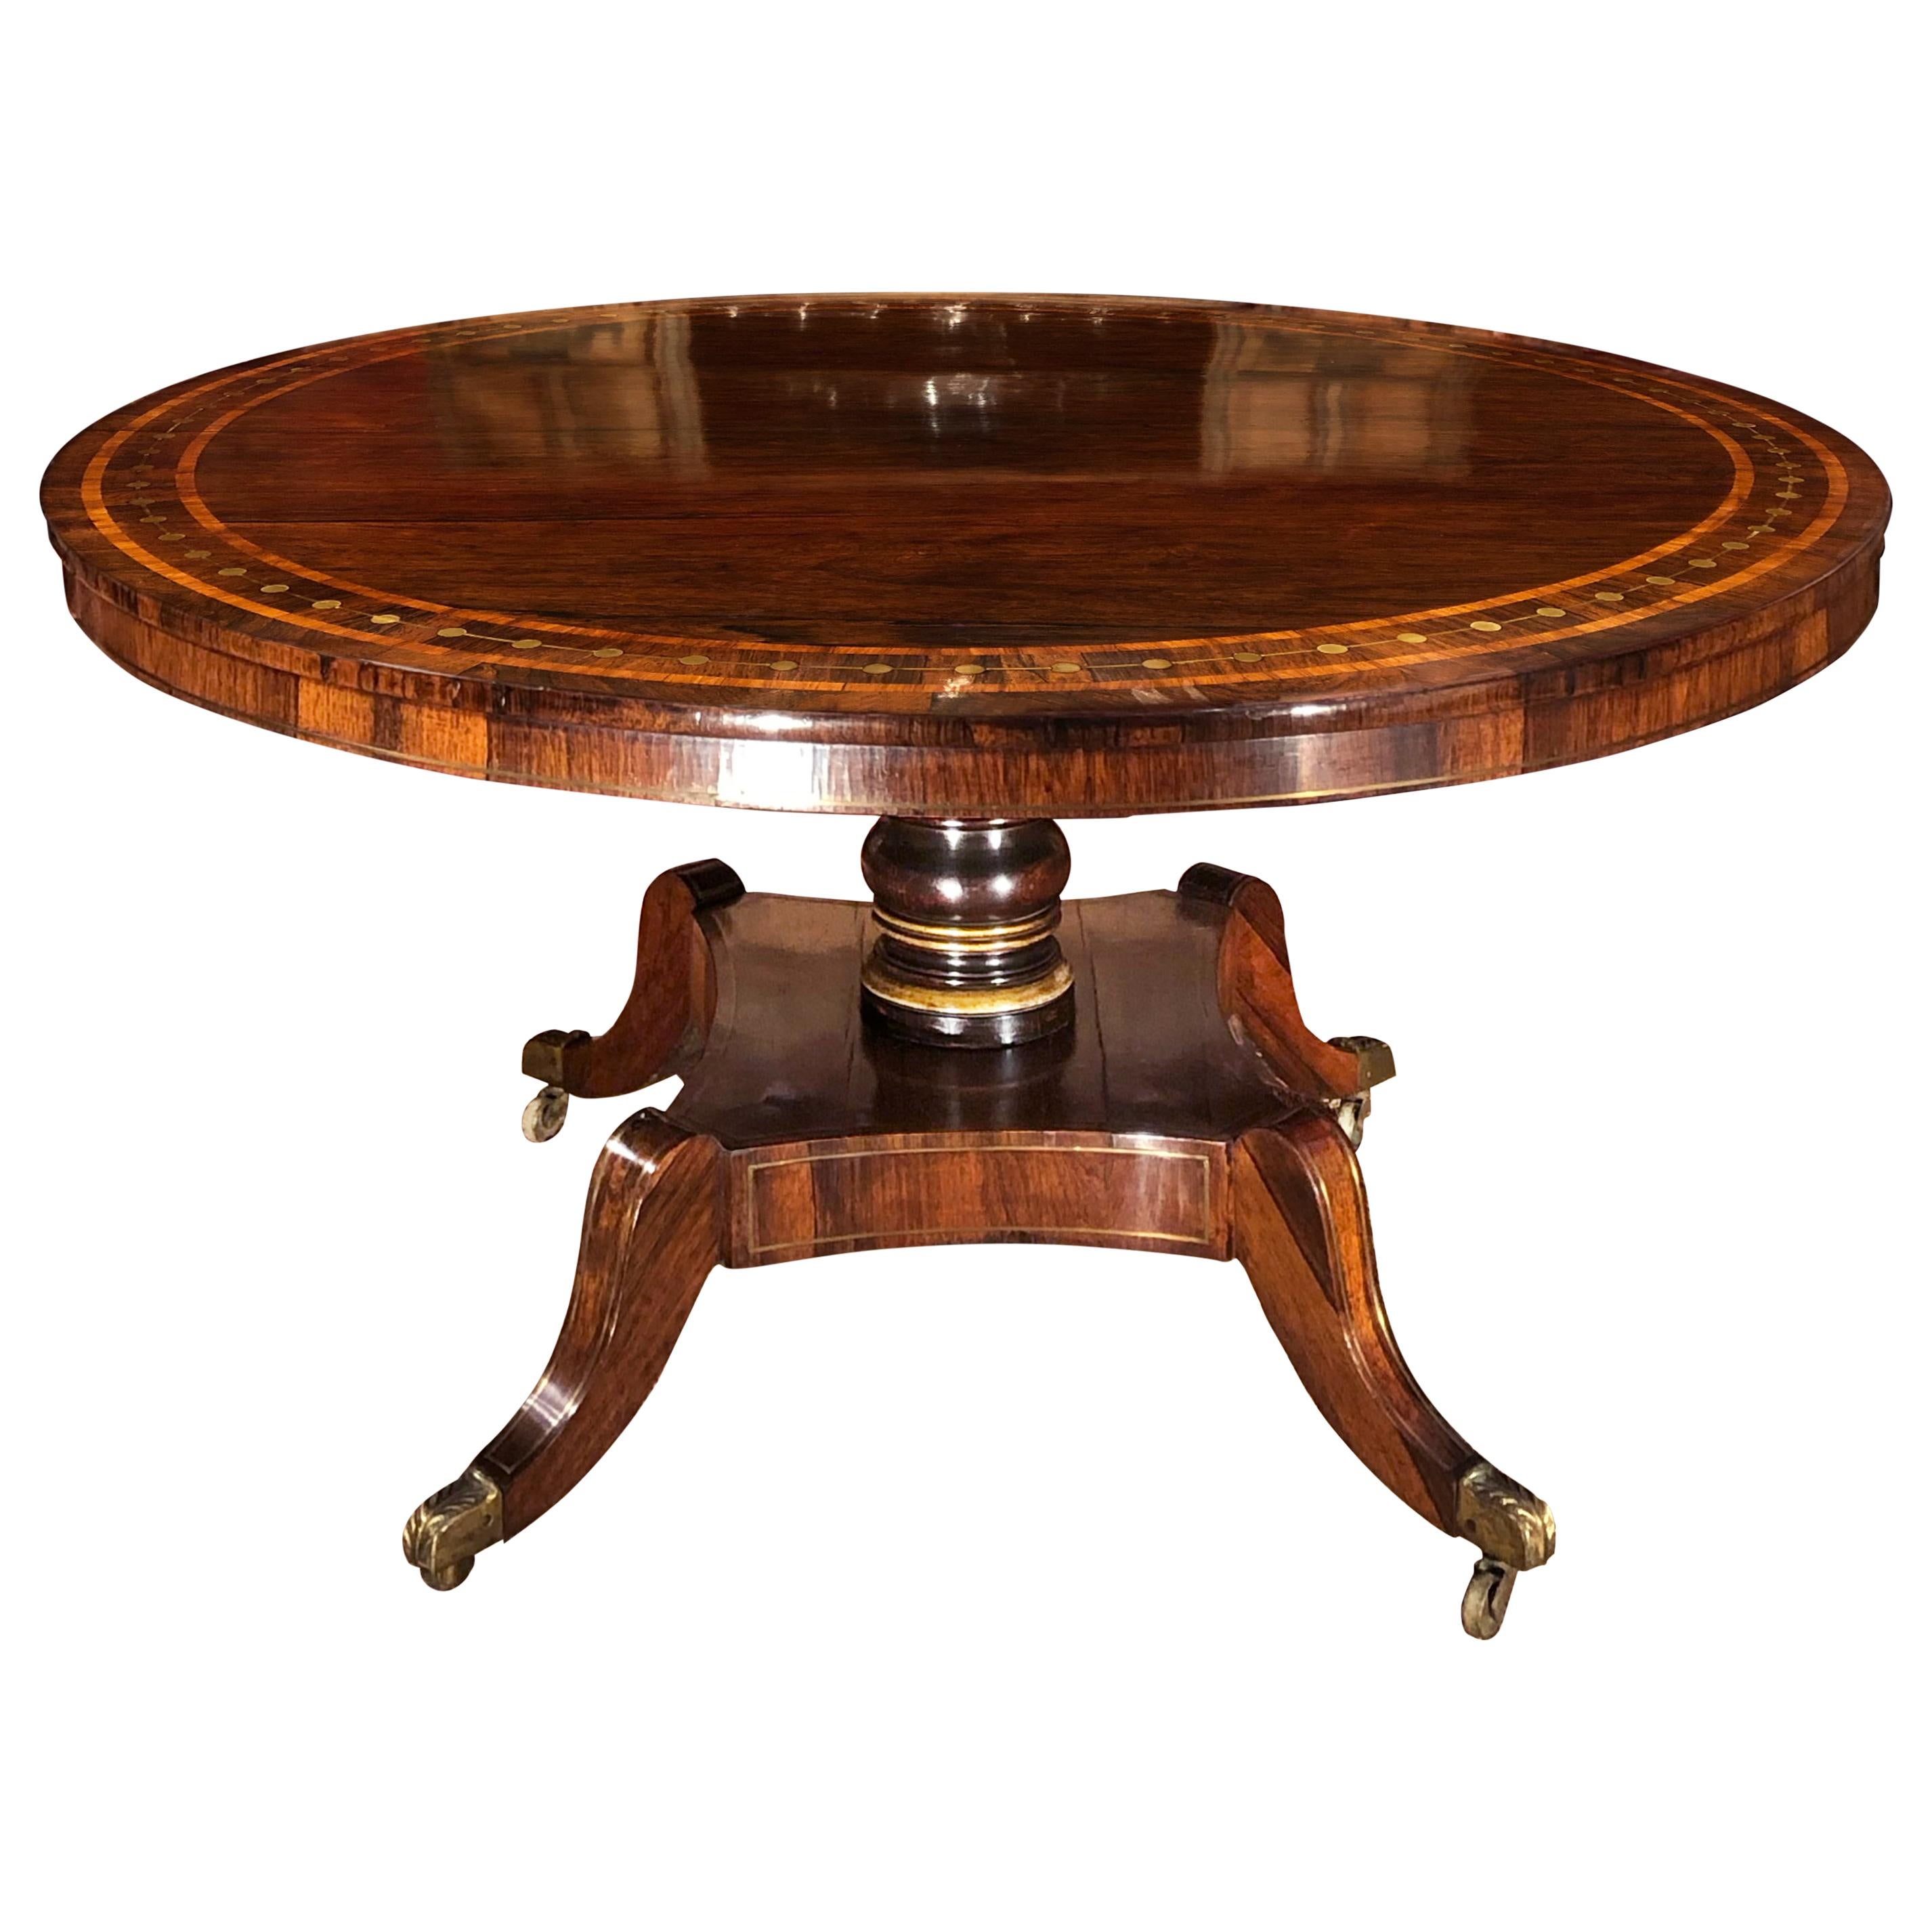 English Regency Period Rosewood Tilt-Top Table